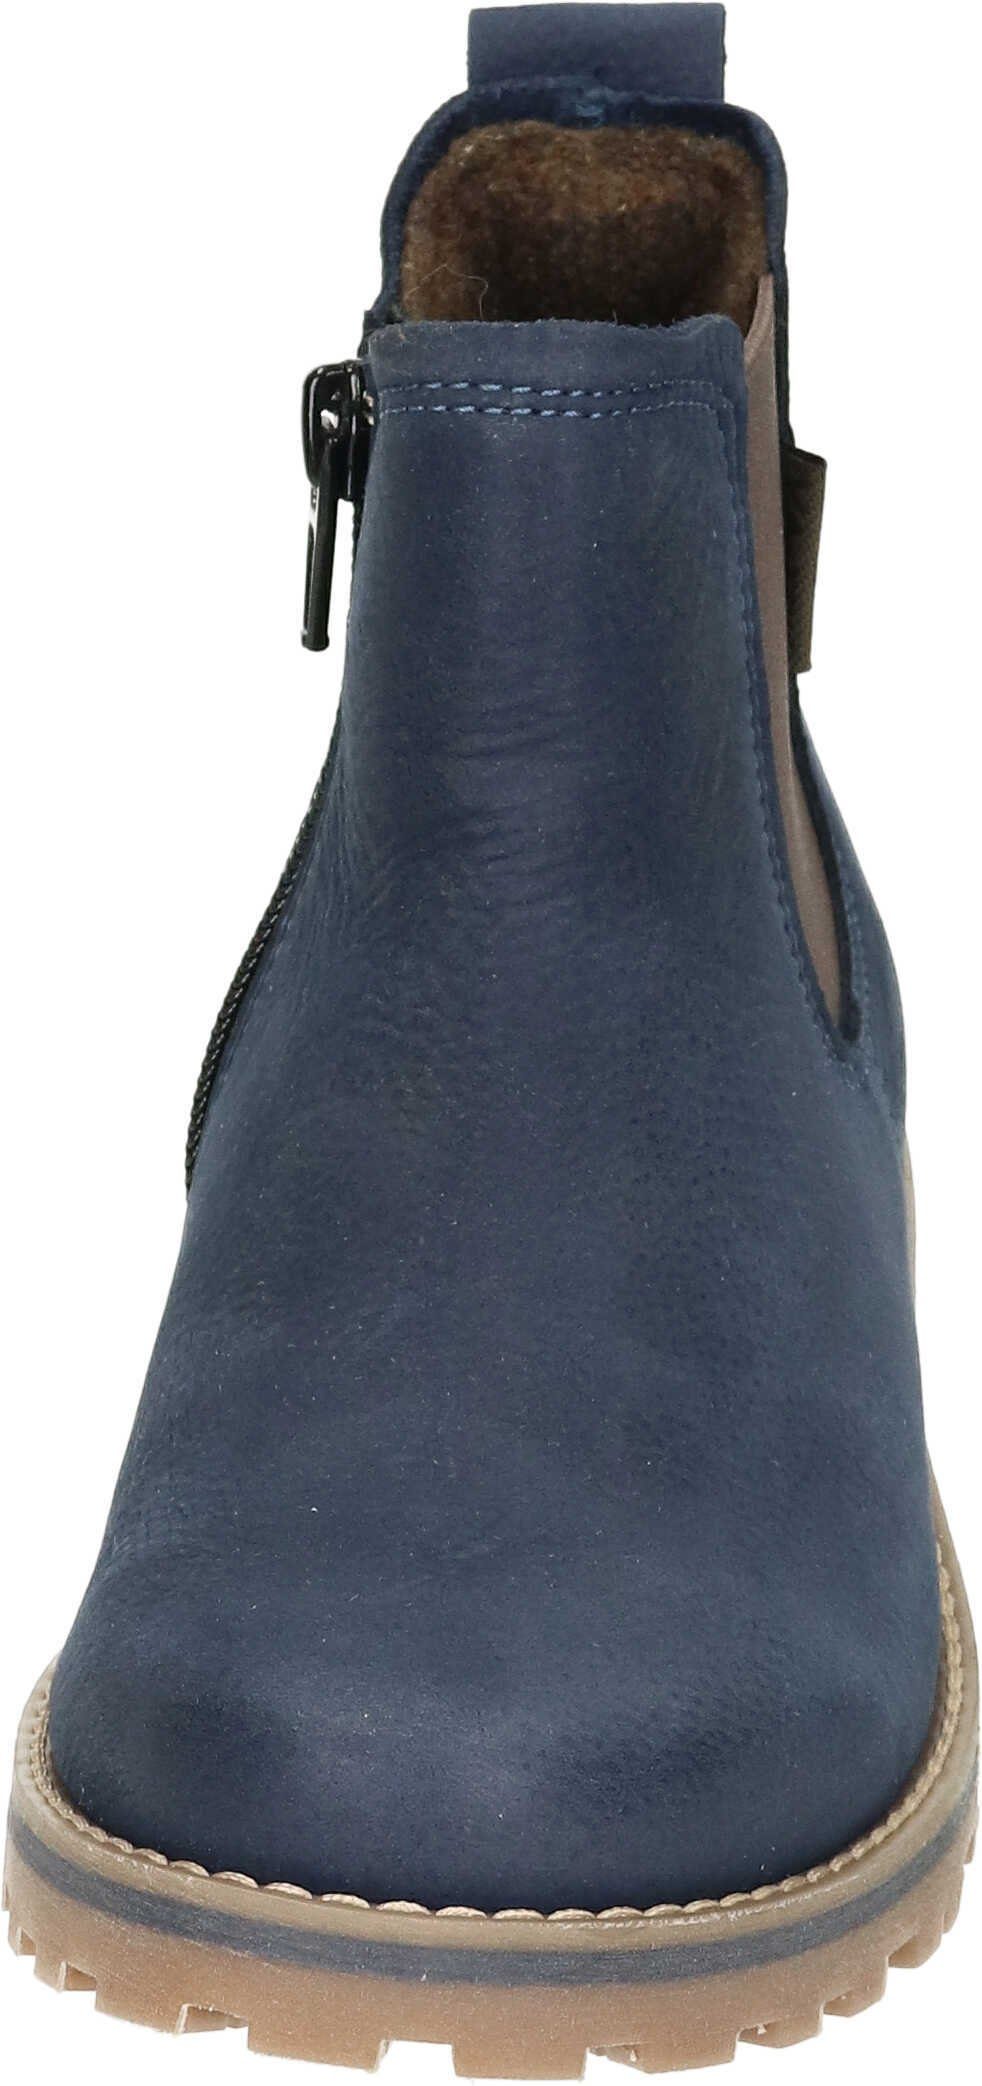 Vado mit Stiefelette Stiefeletten blau VADO-TEX